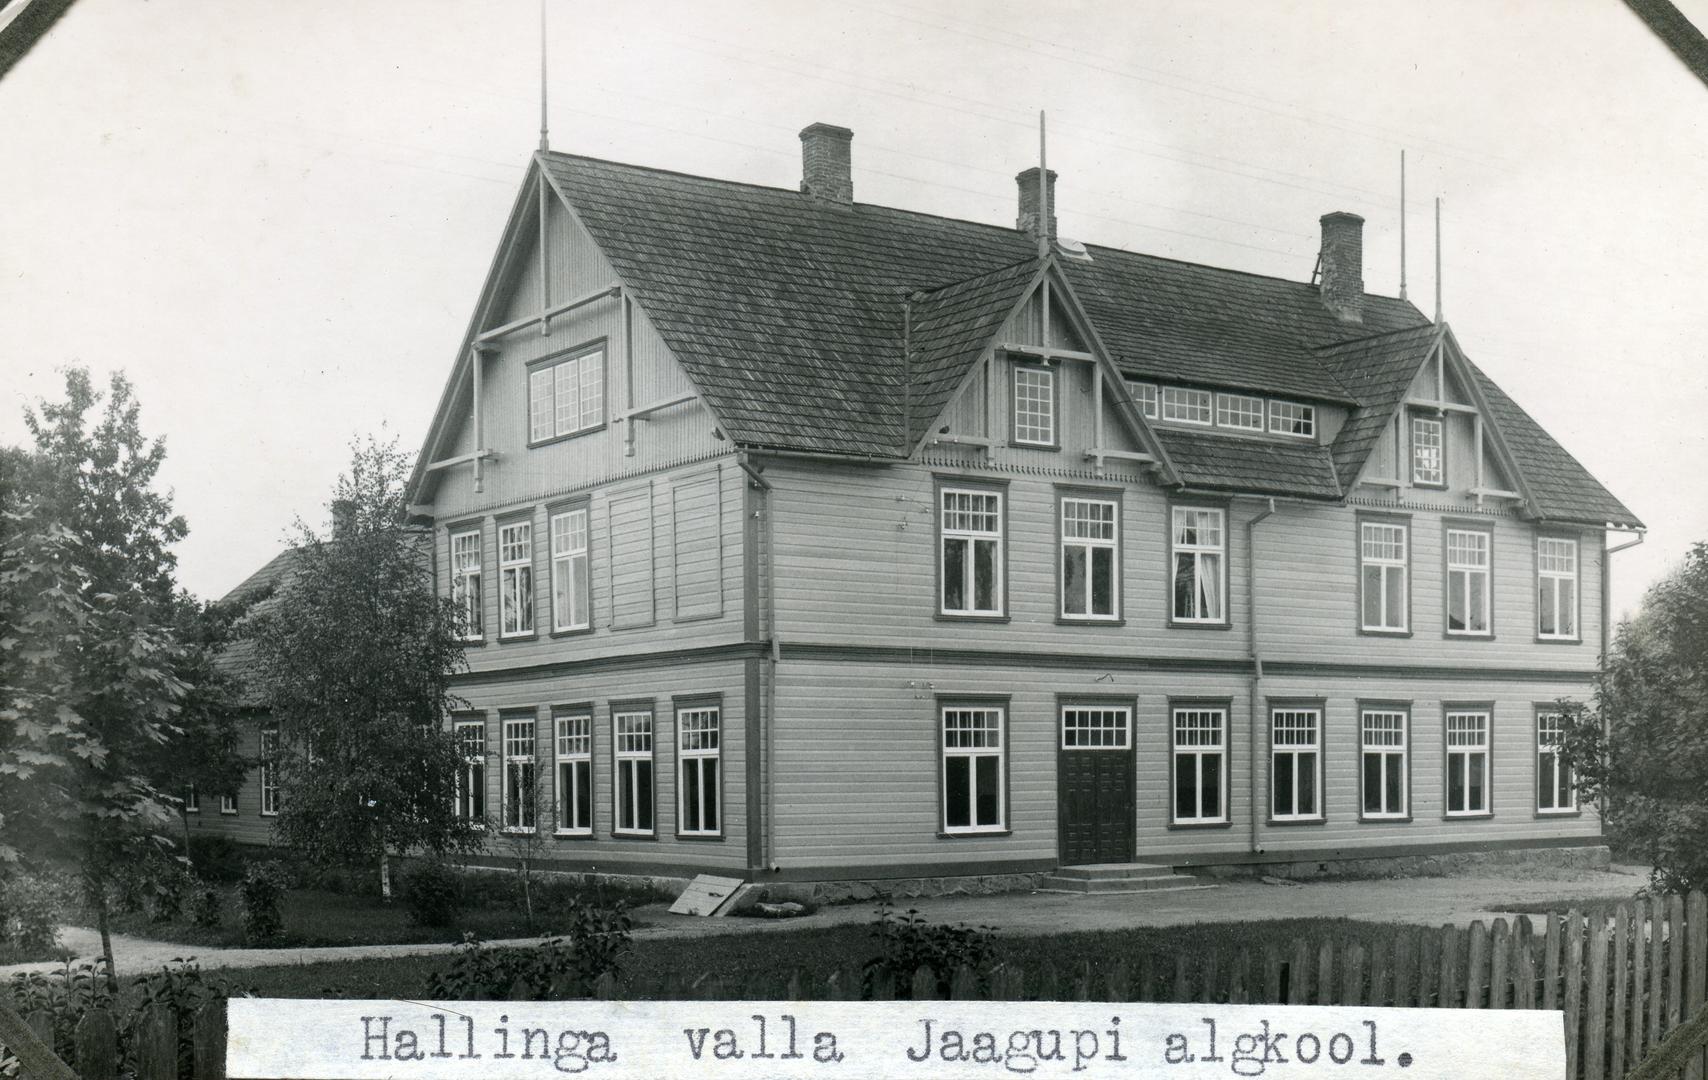 Halinga municipality Jaagupi 6-kl Algkooli building